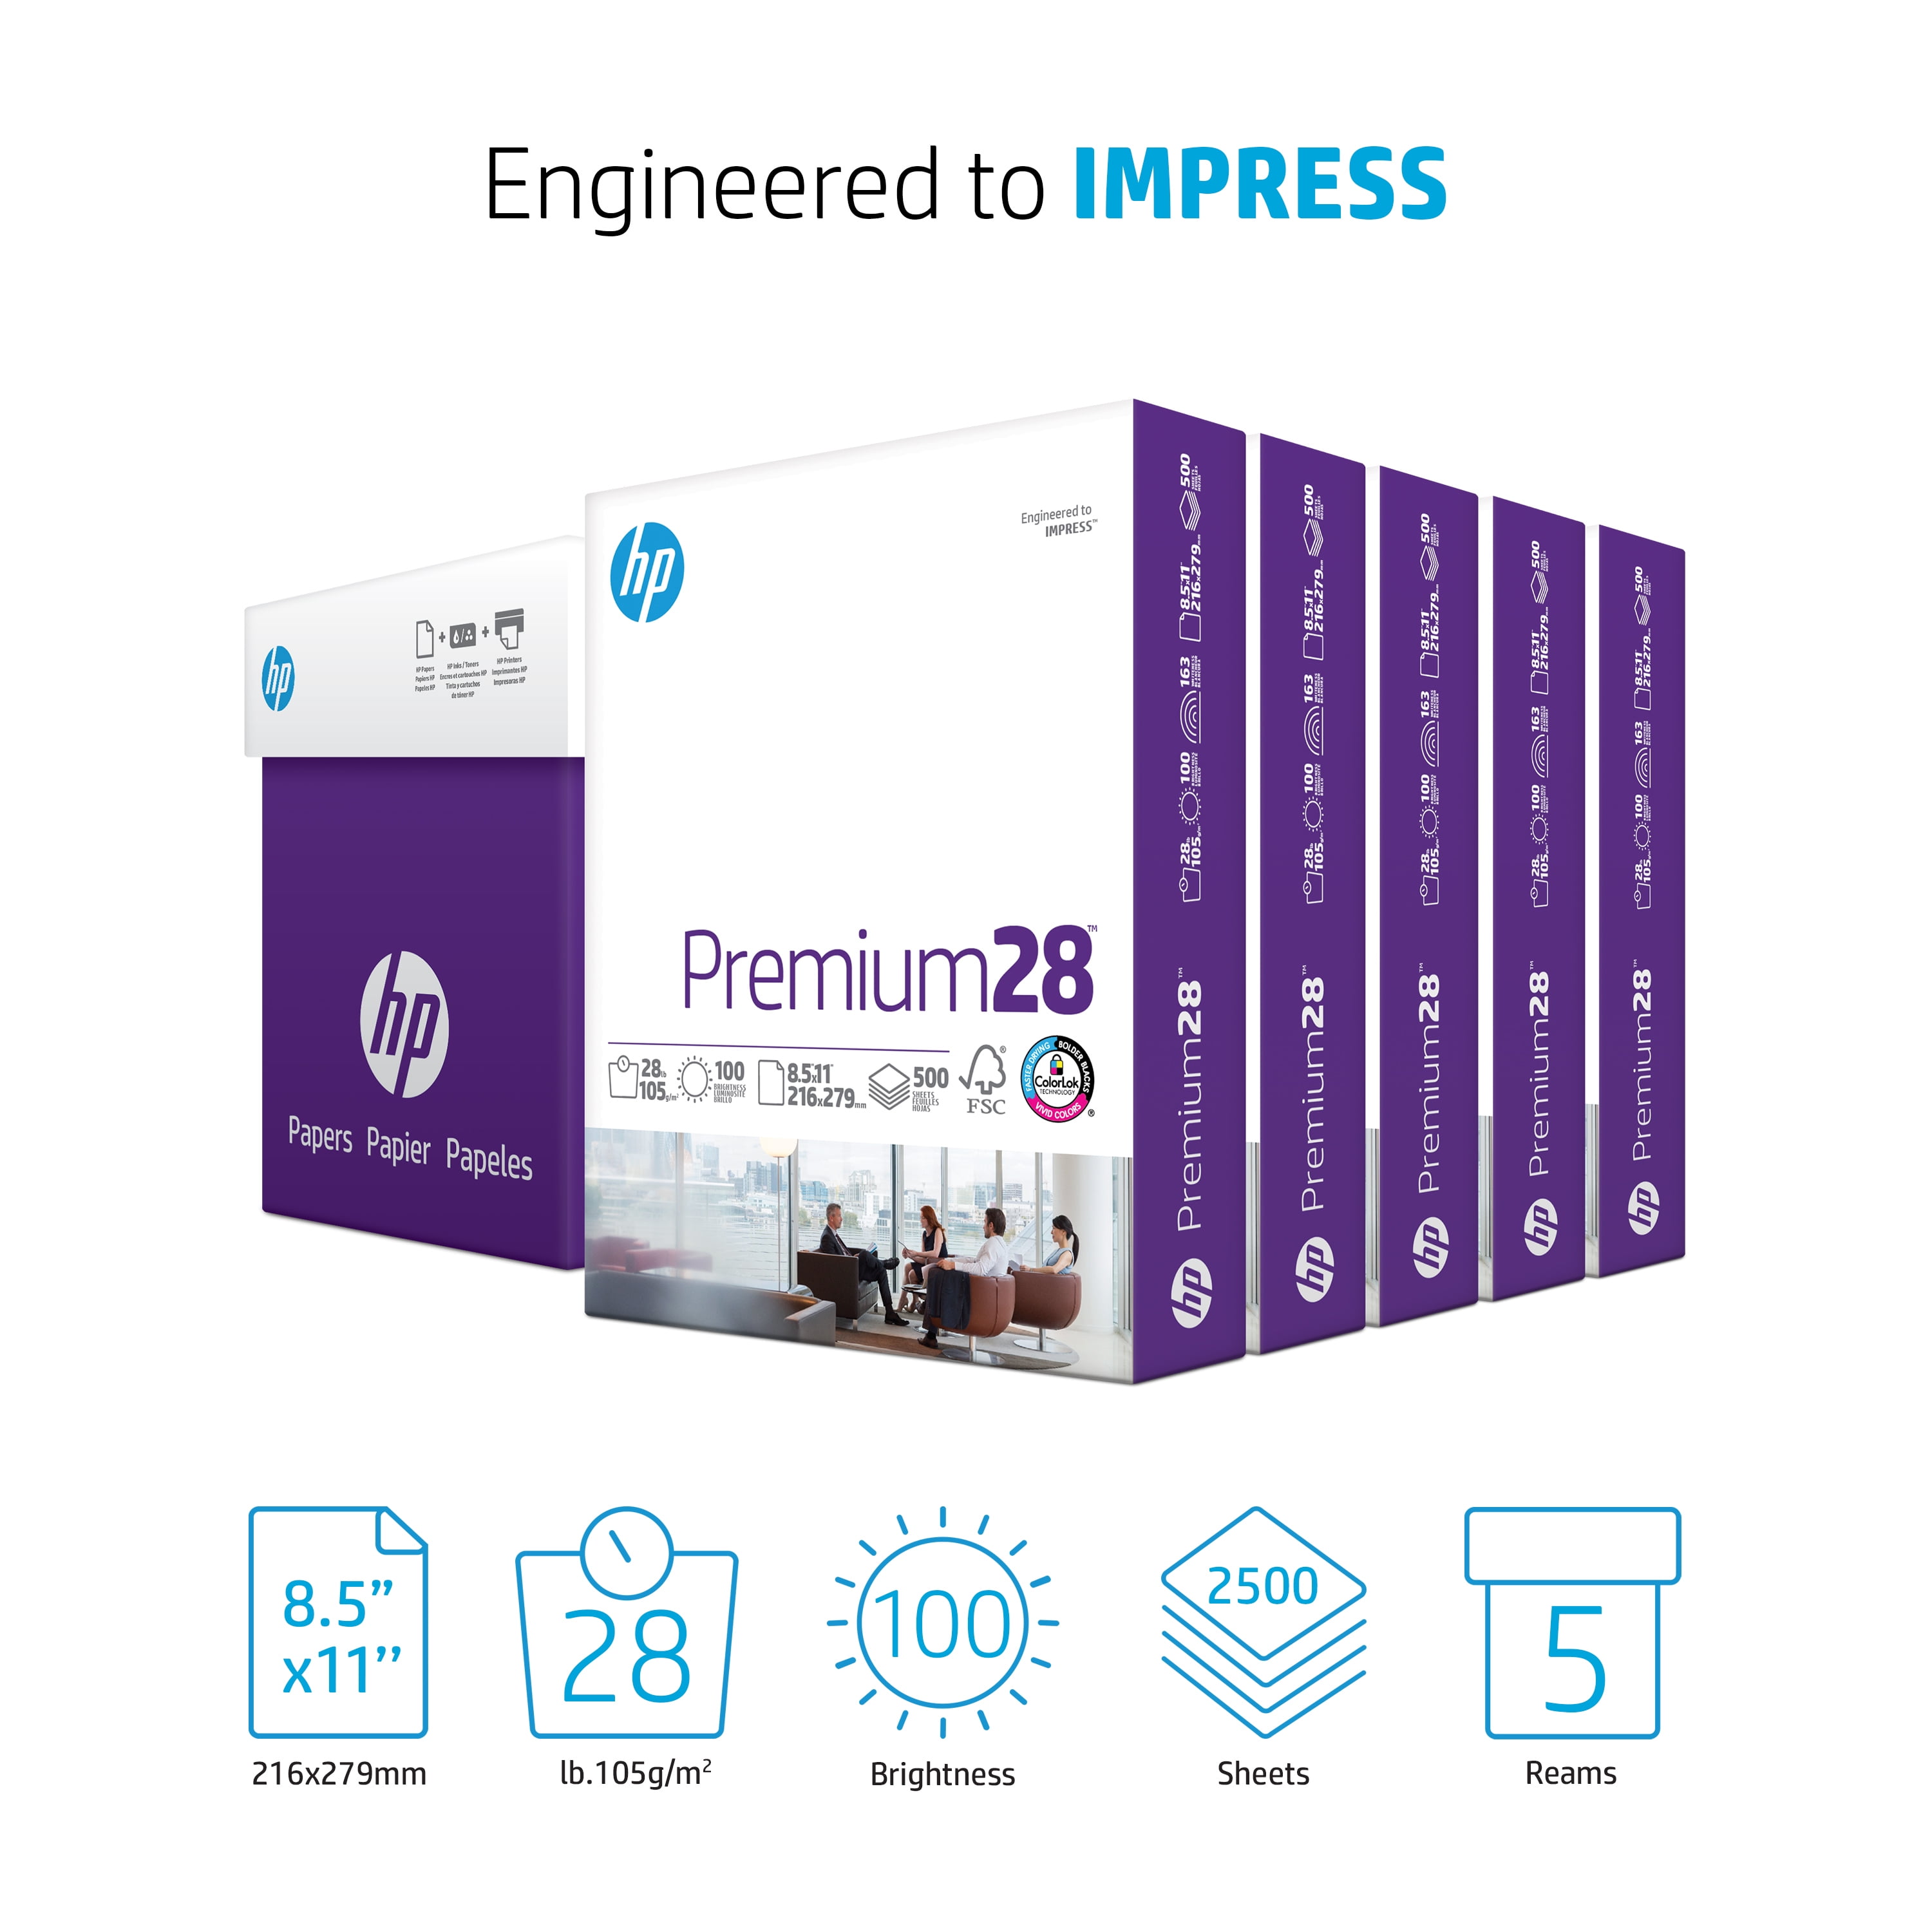 HP Papers Premium28 Laser Copy & Multipurpose Paper